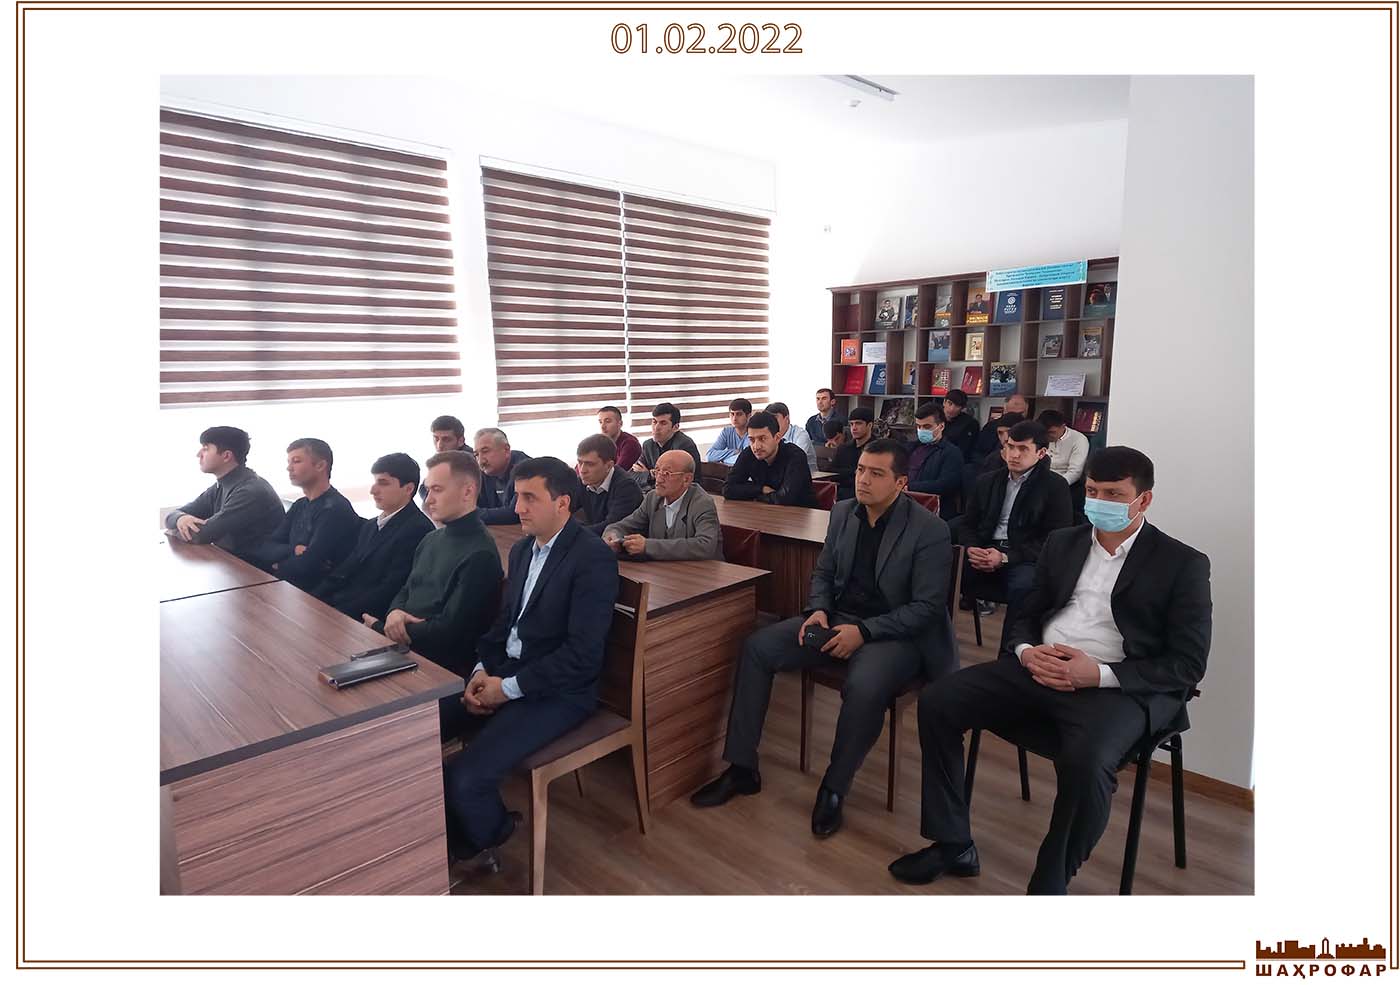 You are currently viewing Собрания о планах по архитектуре и развитию Республики Таджикистан в ОАО «Шахрофар».